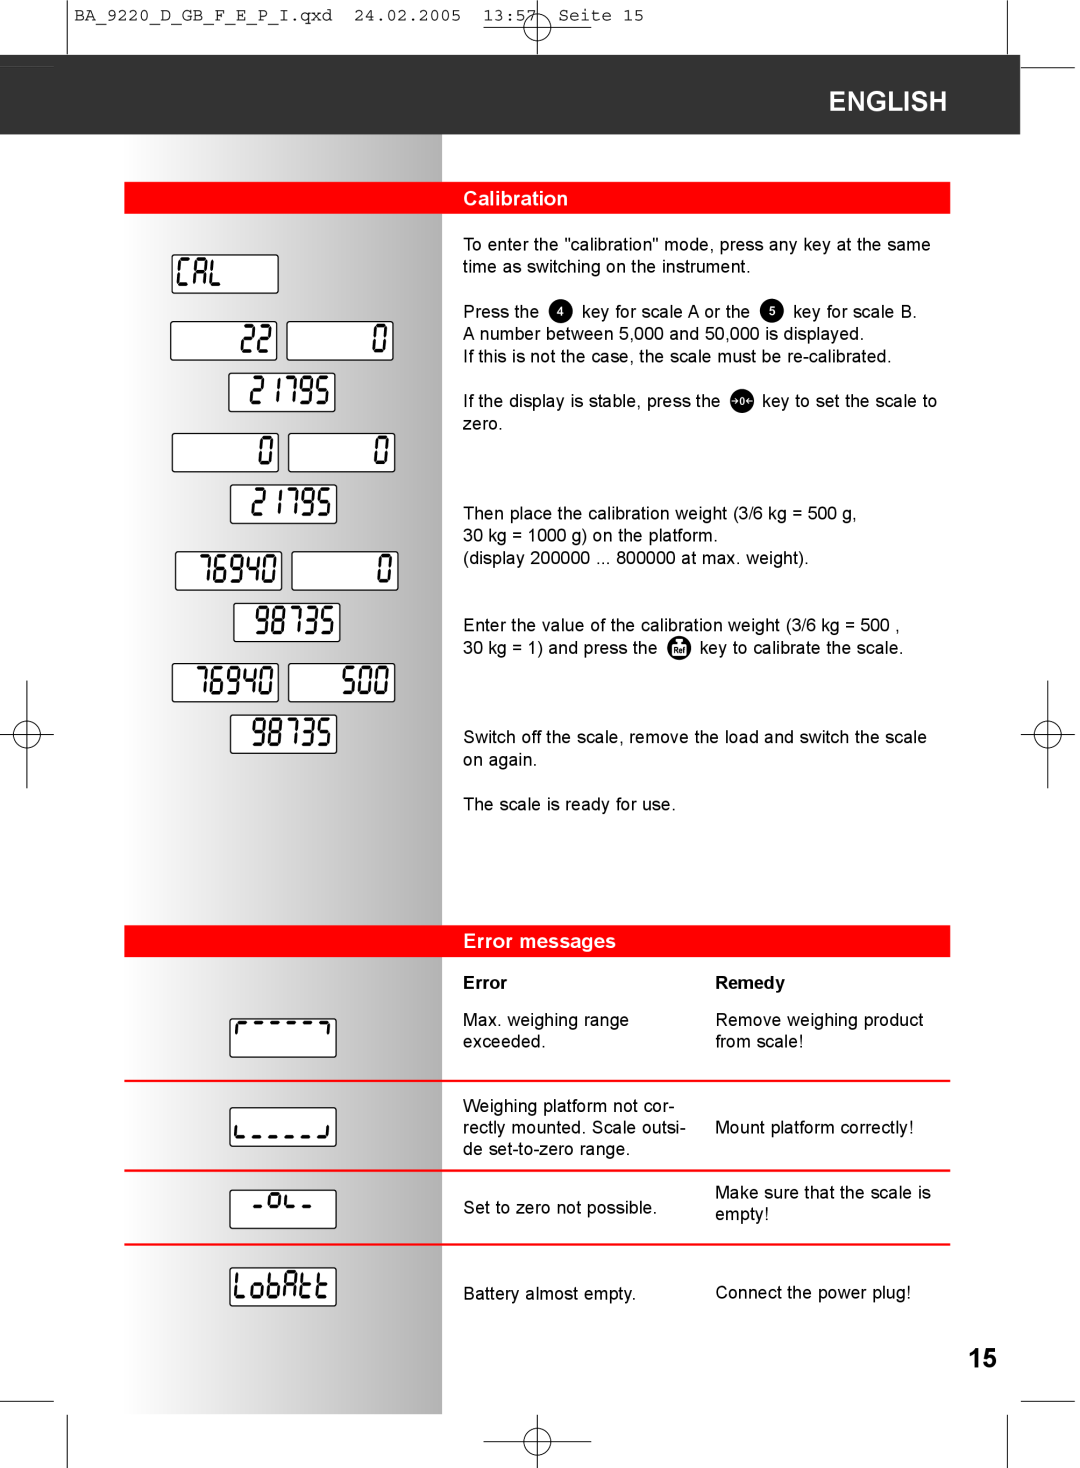 Soehnle 9220 manual Calibration, Error messages, English, Remedy 